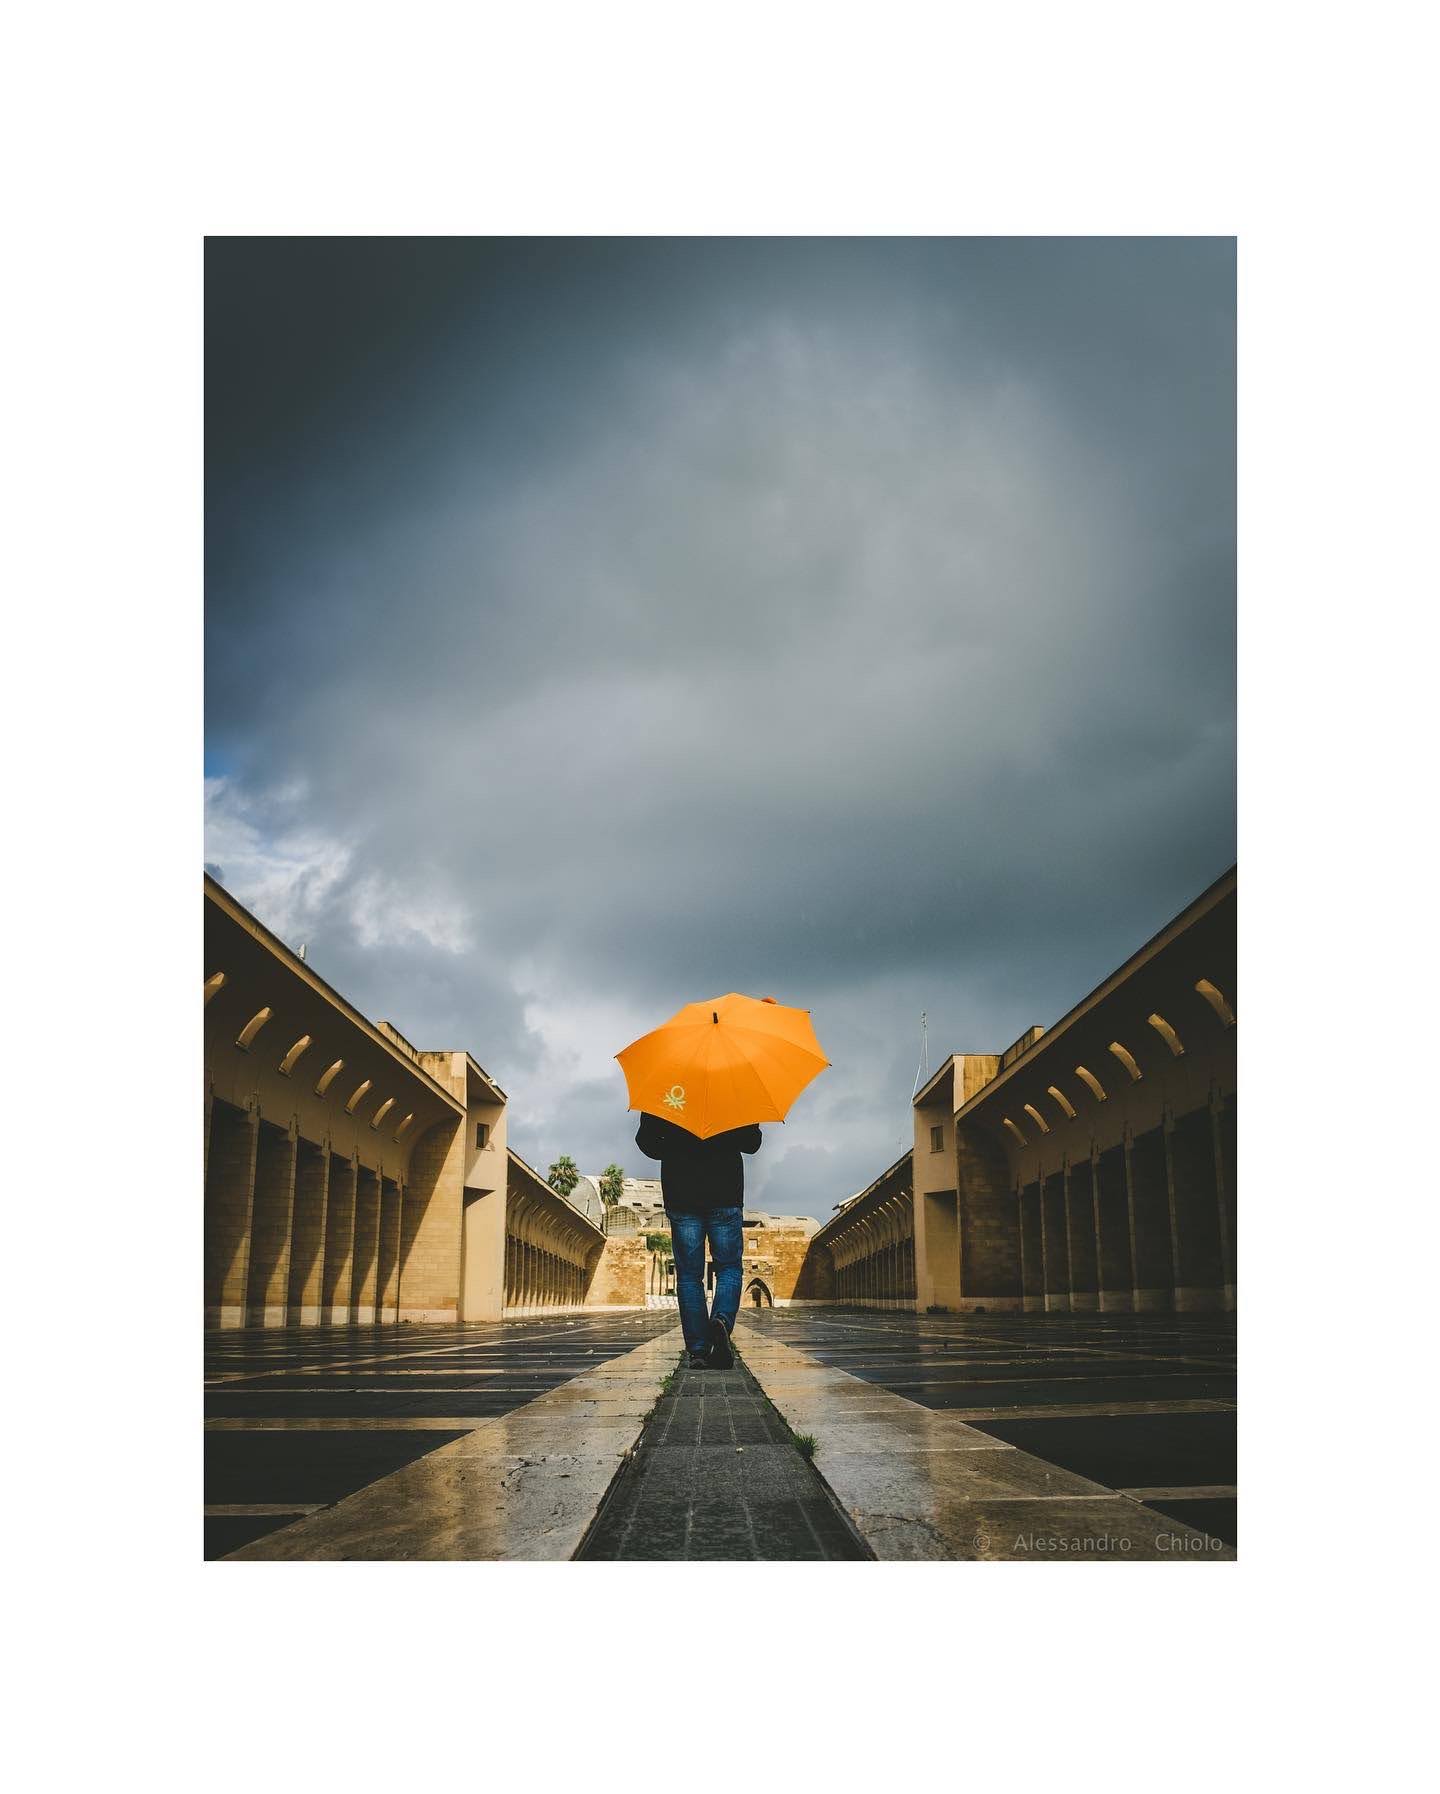 walking under the rain...